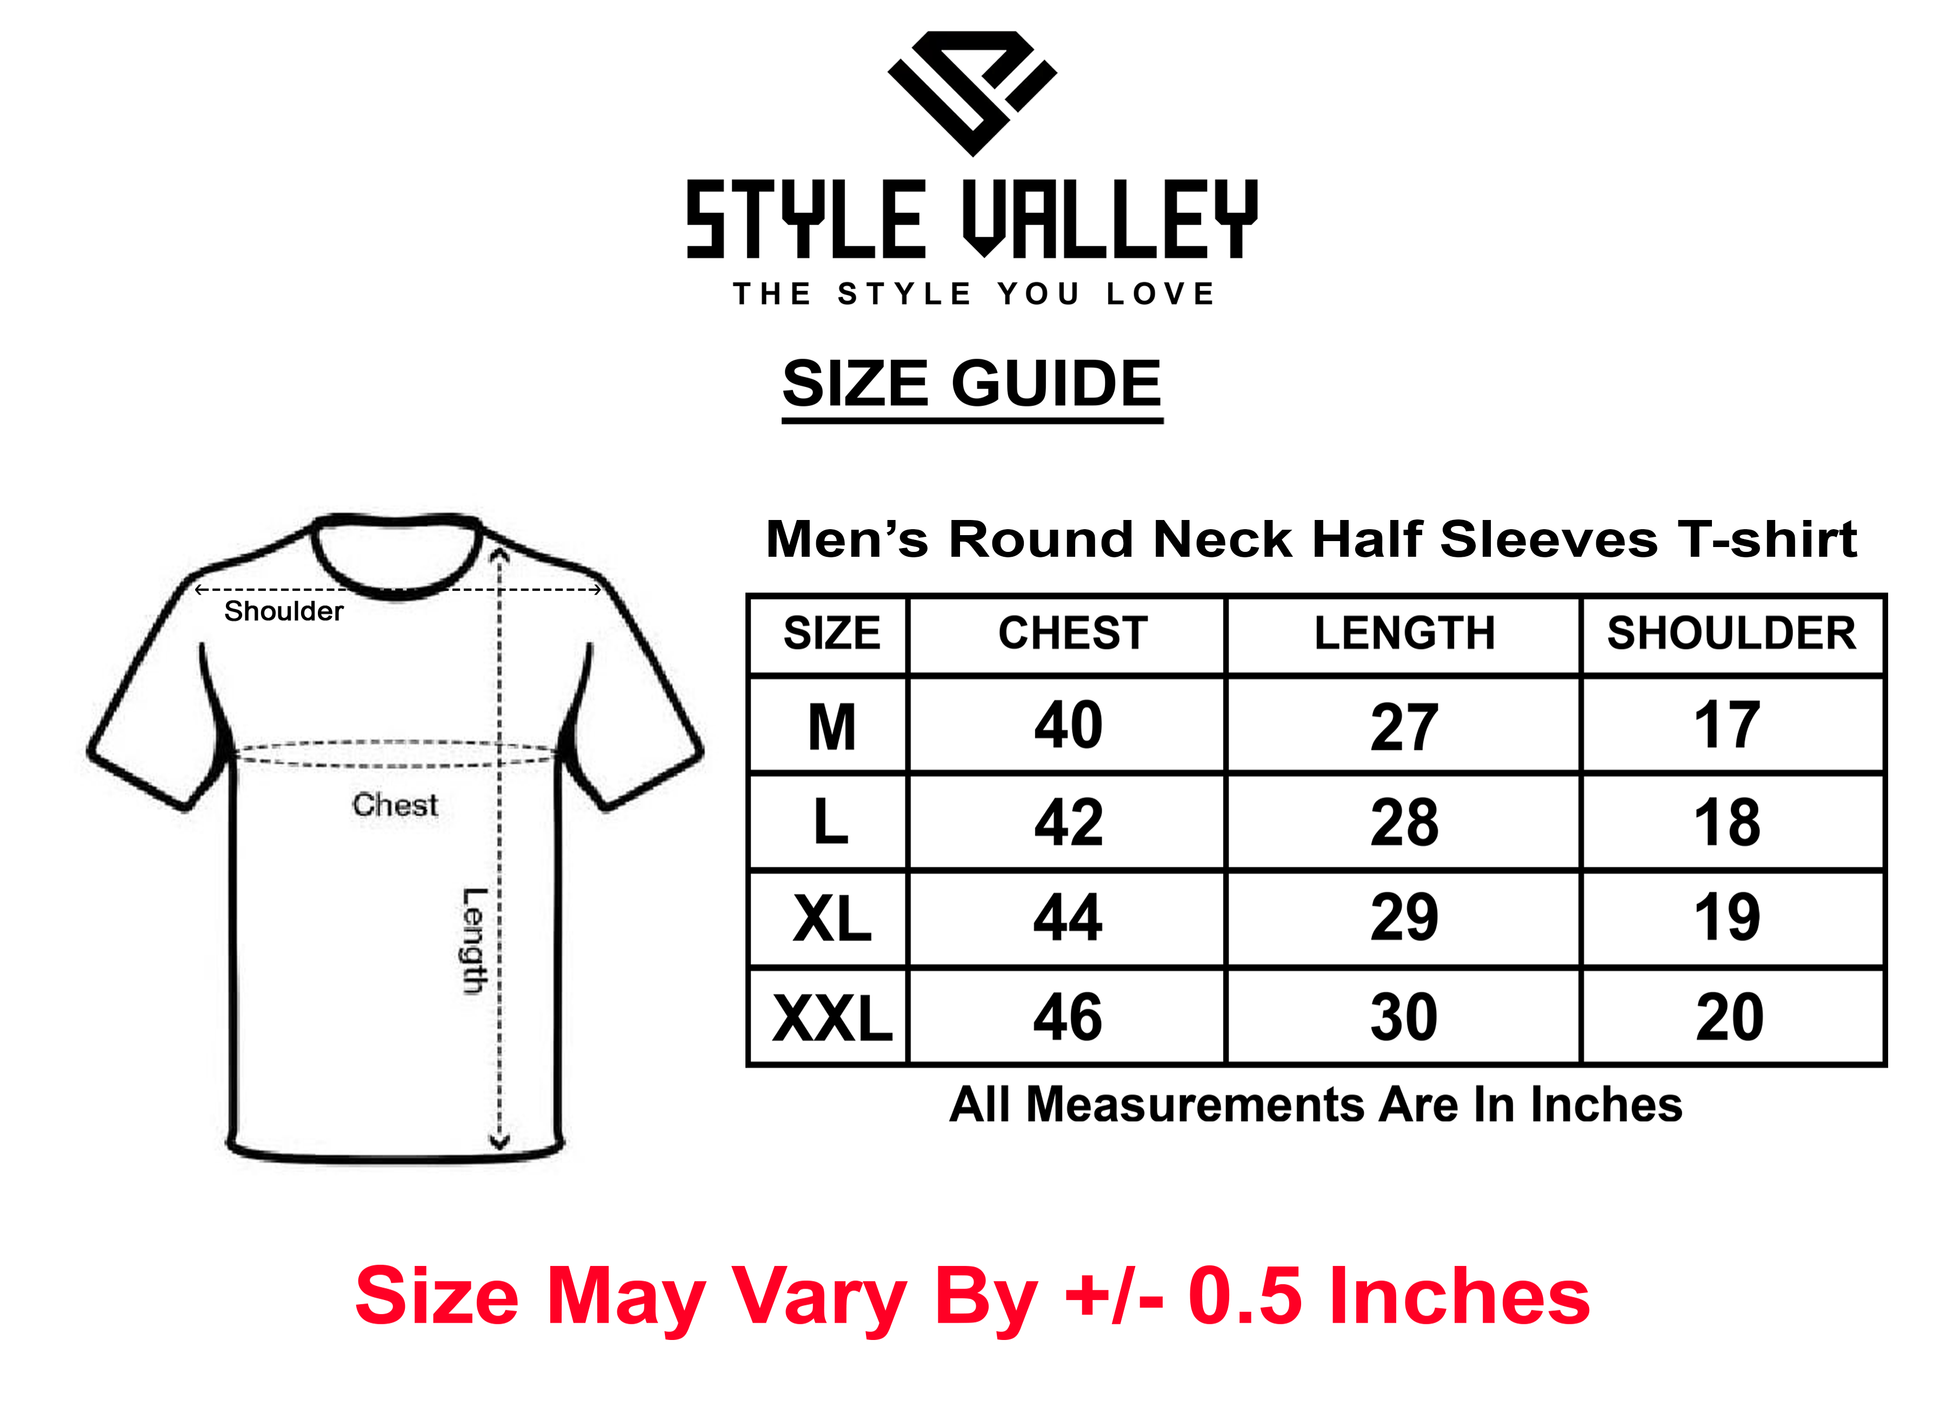 Burberry Mens Shirt Size Chart Hotsell | website.jkuat.ac.ke